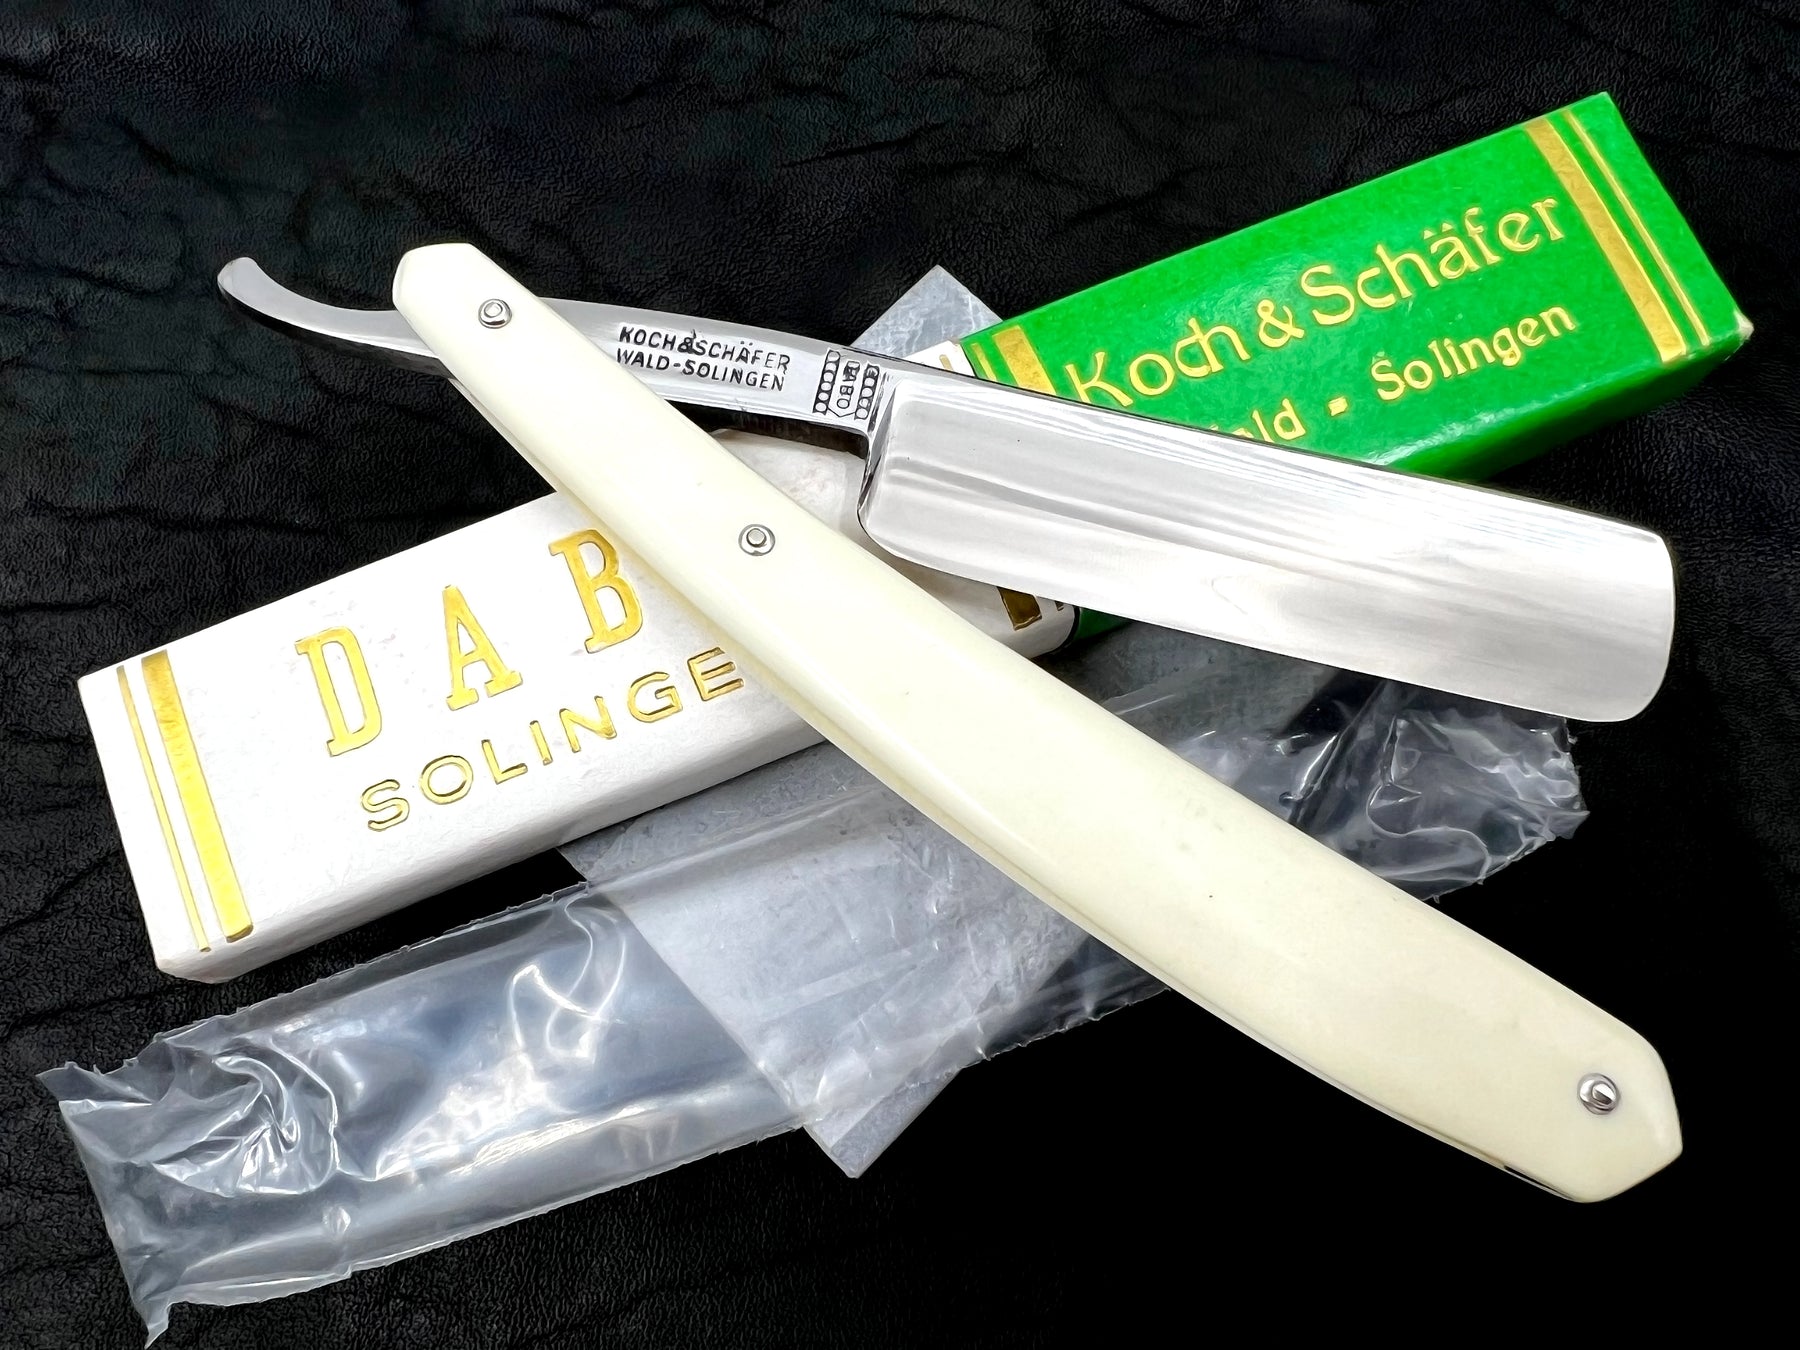 Koch & Schafer "Dabo" No. 28 - NOS 13/16 Full Hollow Blade - Pristine Vintage Solingen Straight Razor